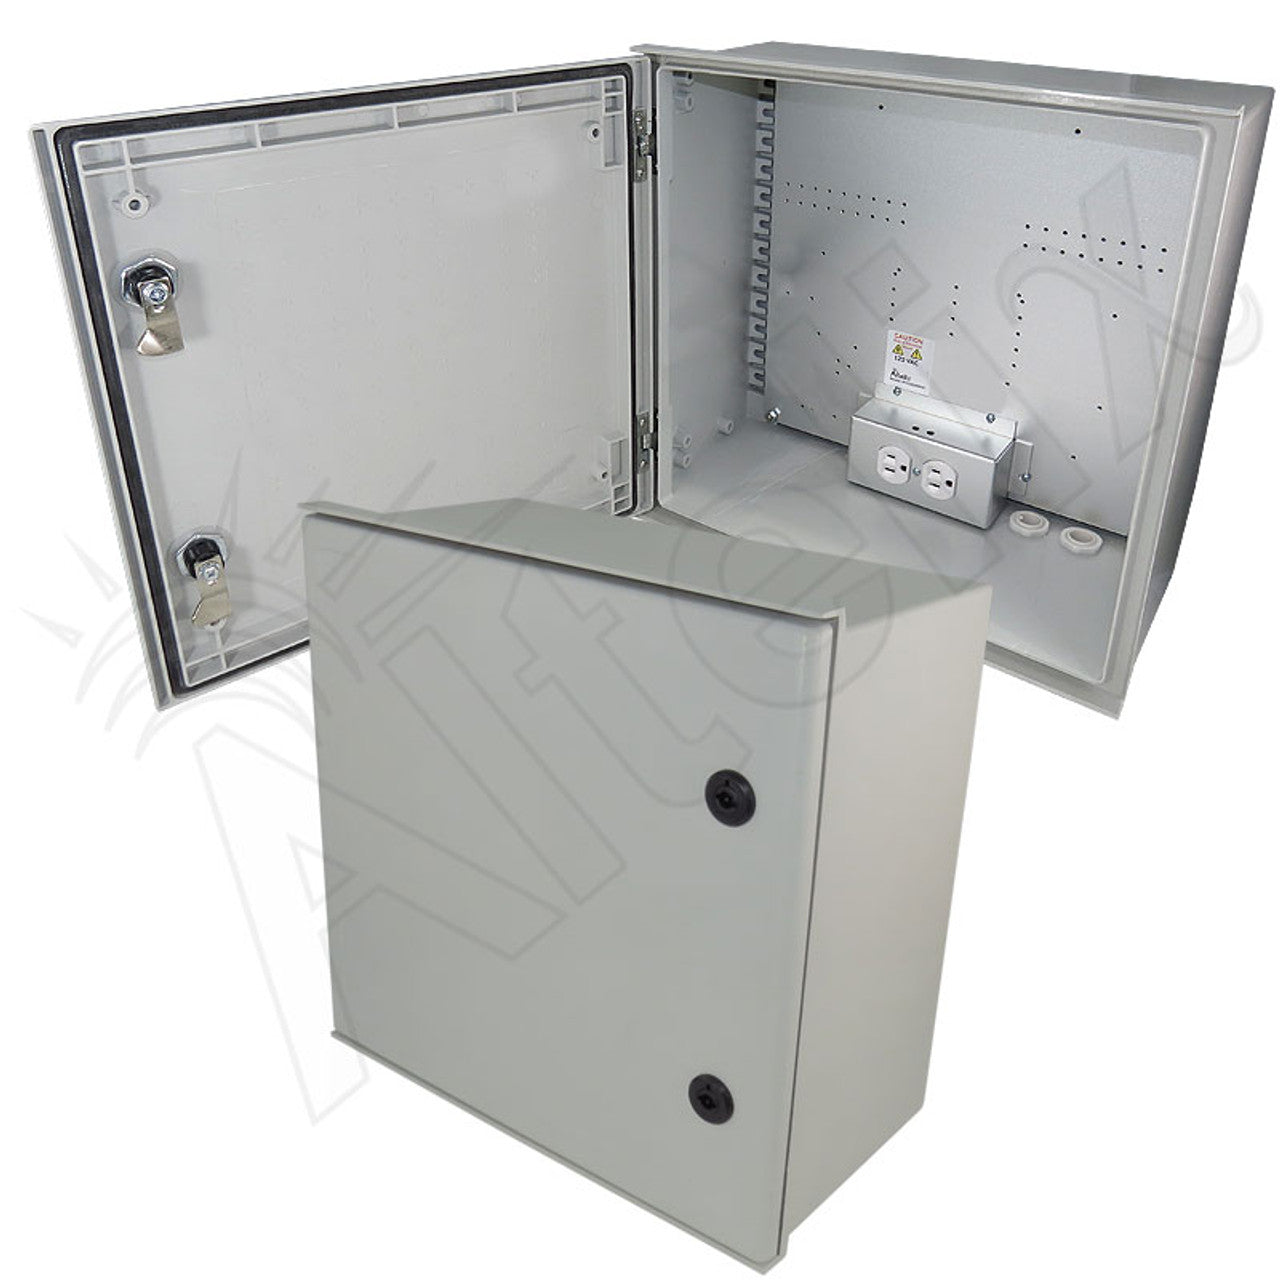 Altelix NEMA 3X Fiberglass Weatherproof Enclosure with Equipment Mounting Plate & 120 VAC Outlets